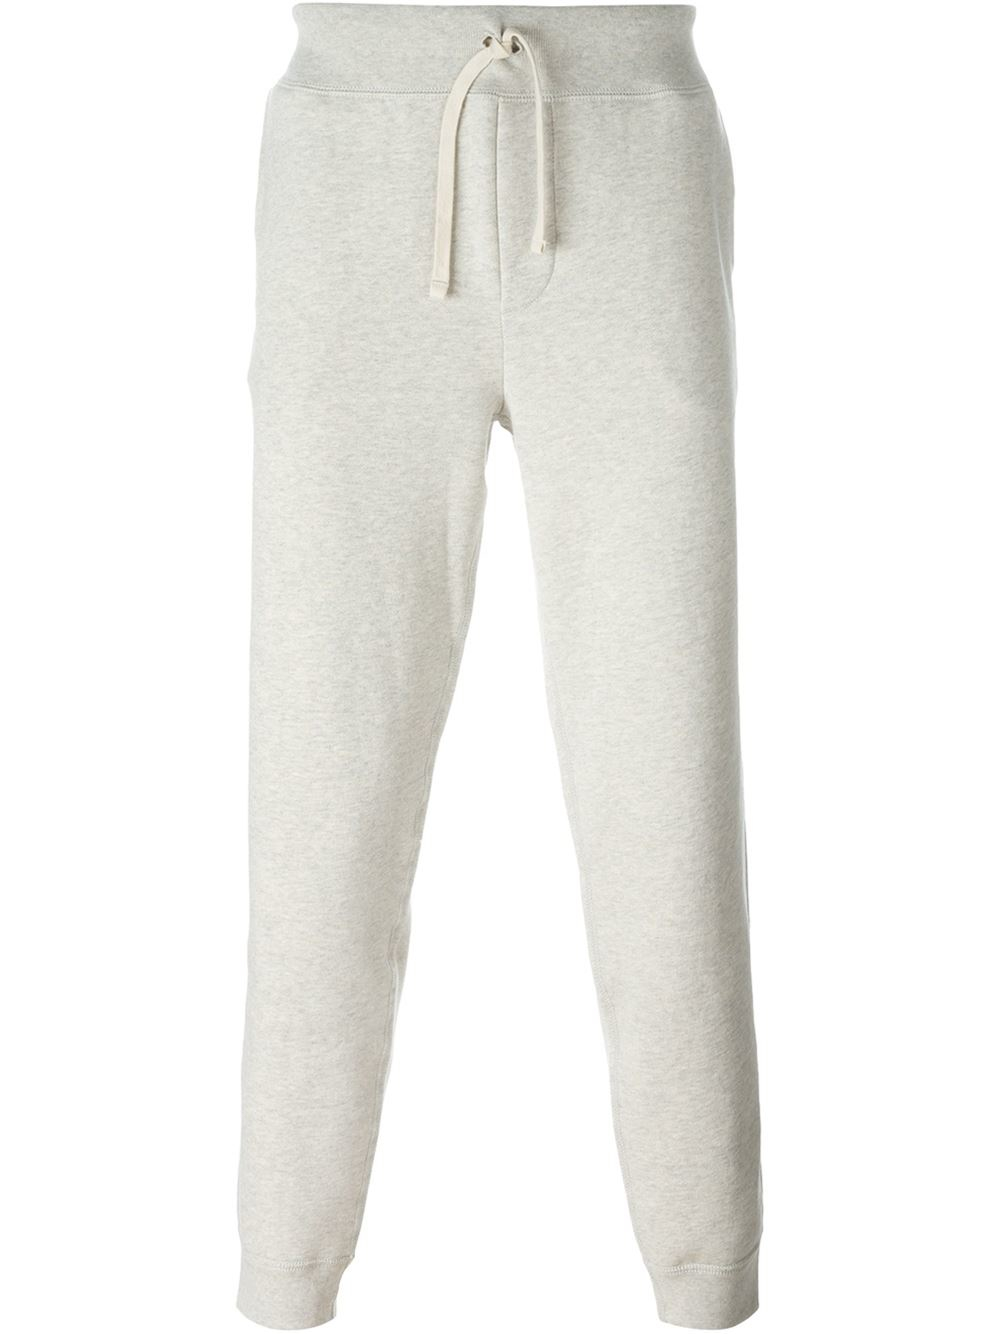 Polo ralph lauren Cuffed Sweatpants in Gray for Men (GREY) | Lyst